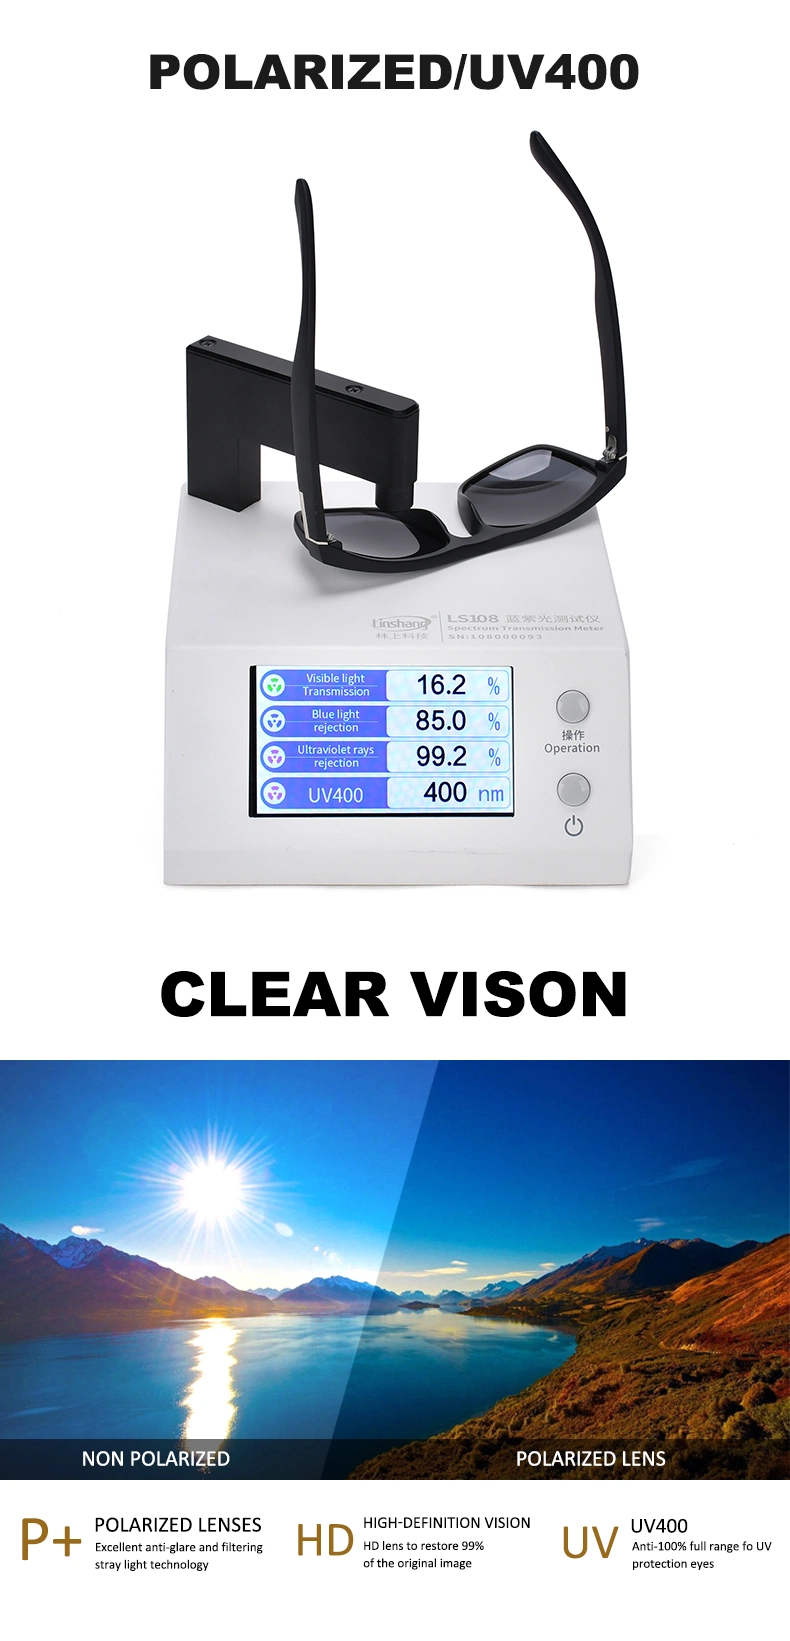 2021 Fashionable Lentes De Sol Engraved Logo Heat Tranfer Printing Polarized Sunglasses